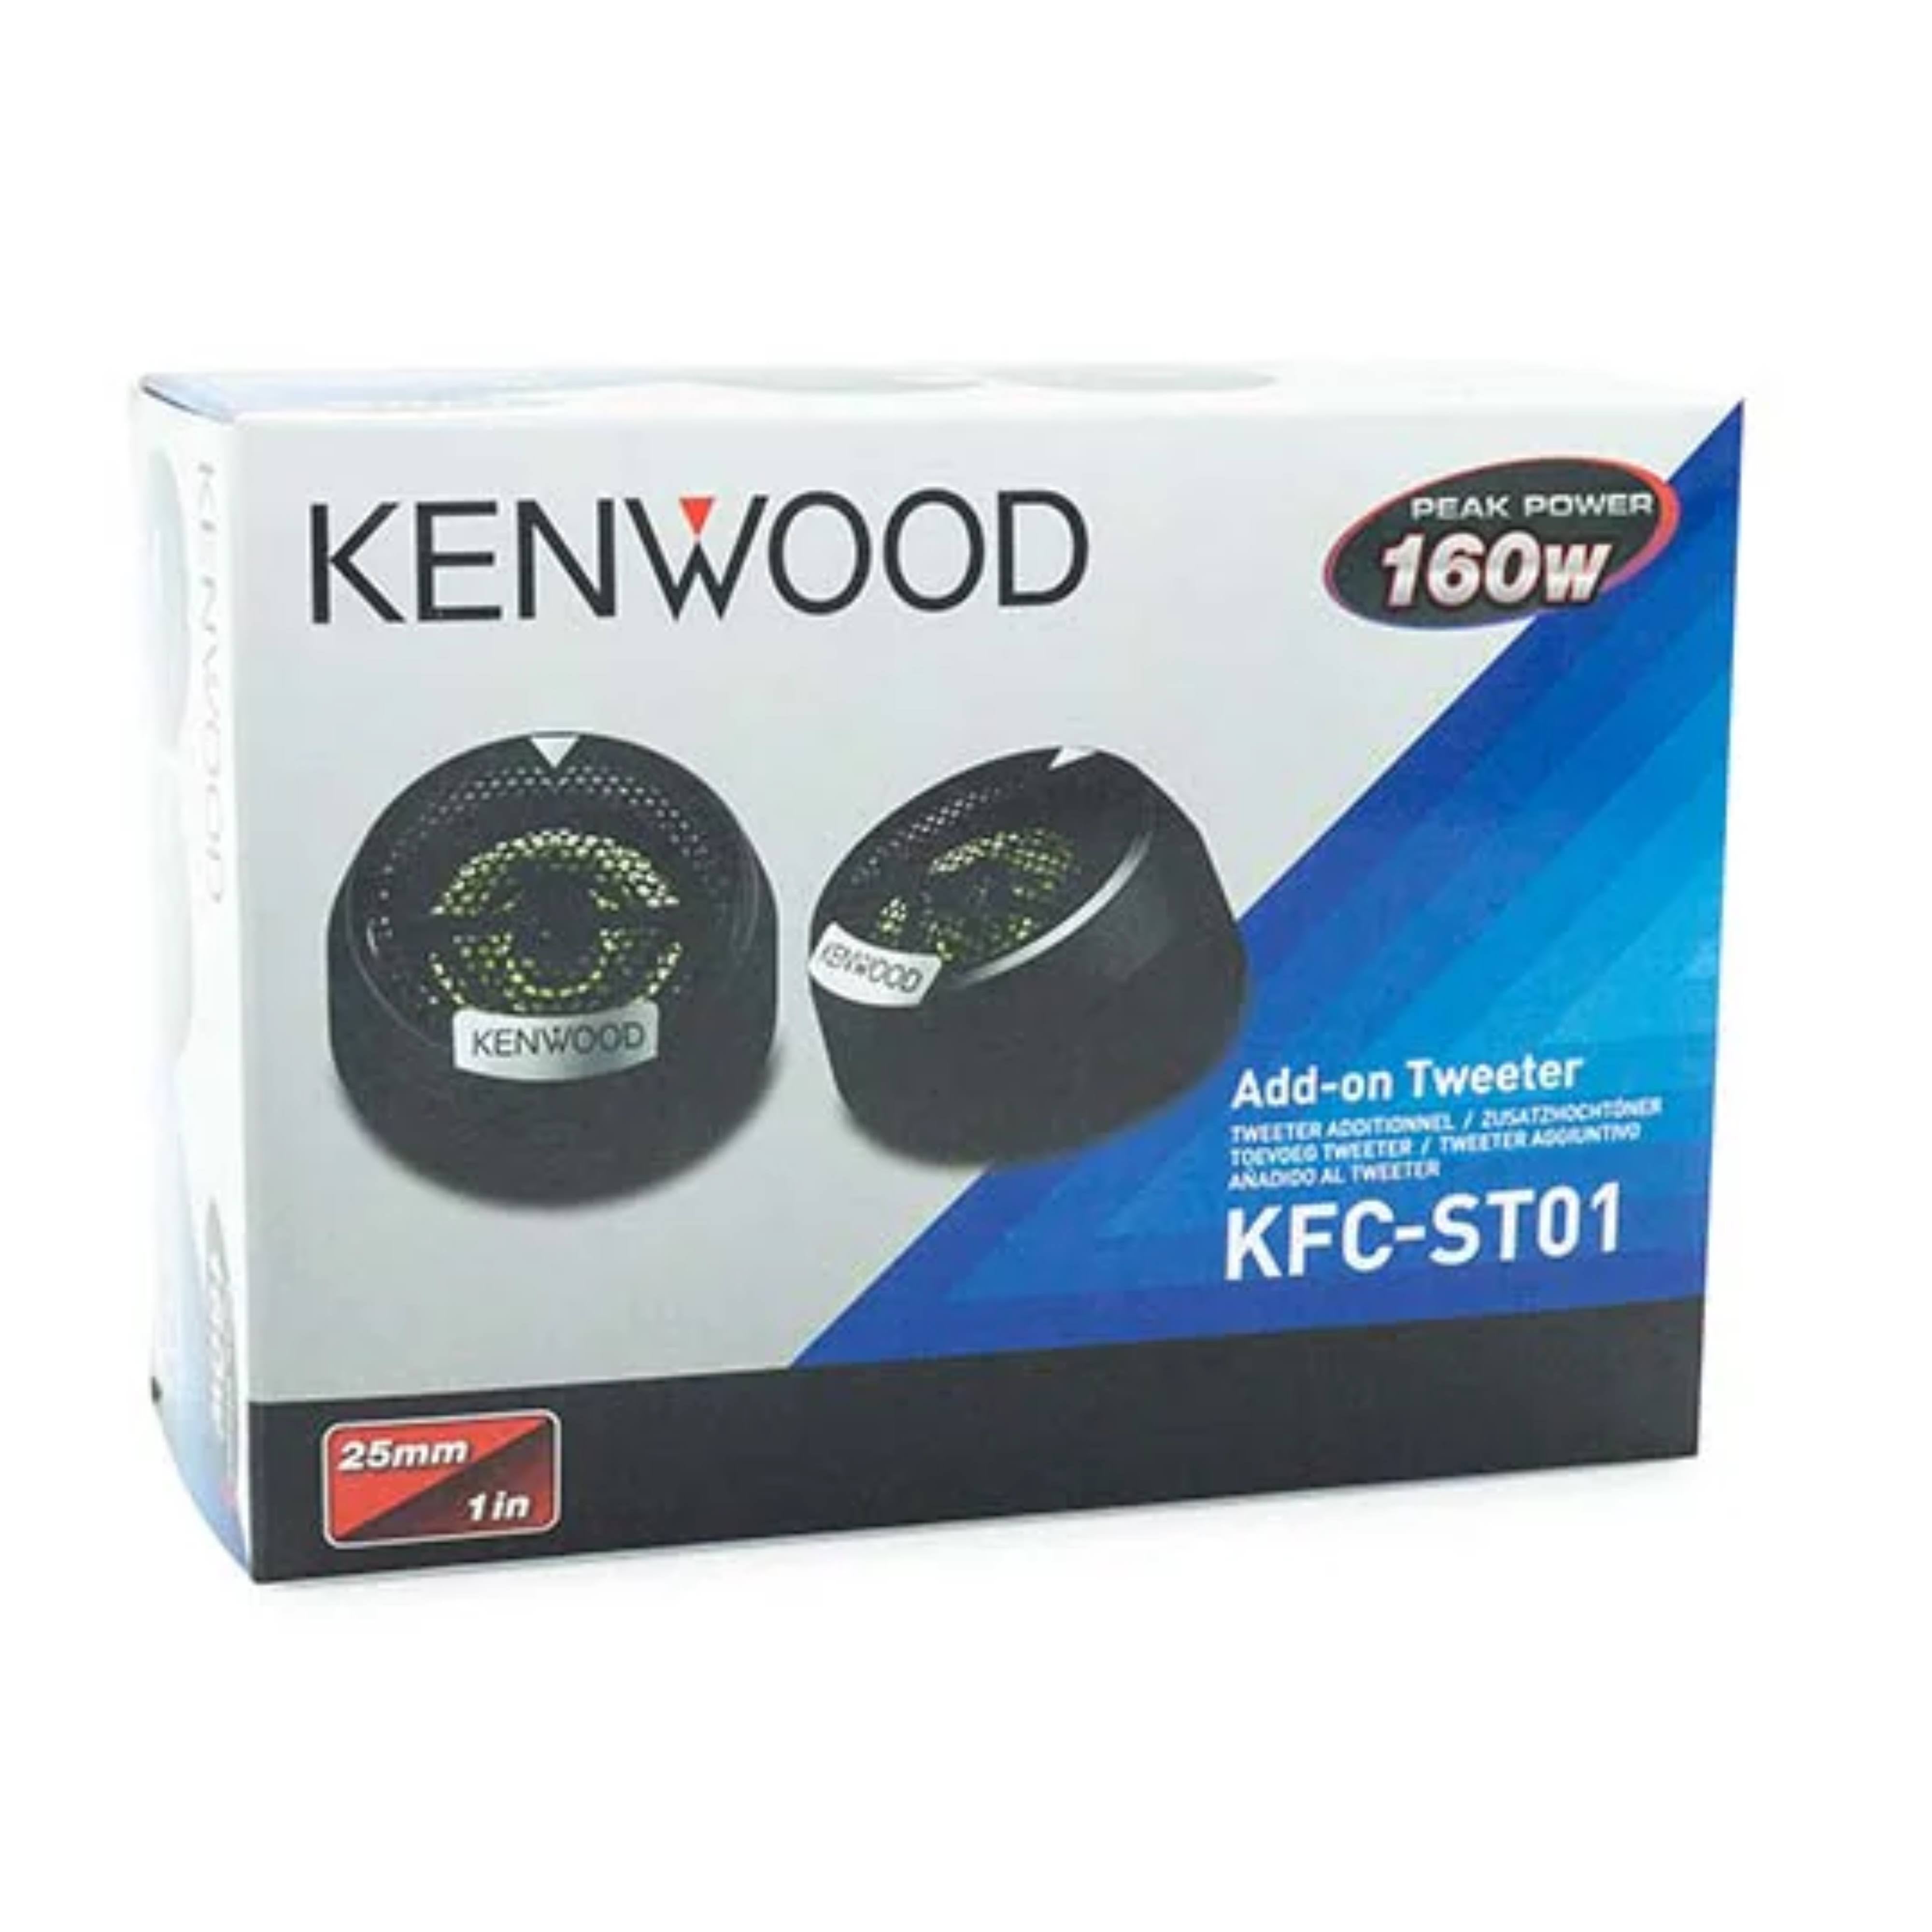 Kenwood KFC-ST01 1-Inch balanced dome tweeters